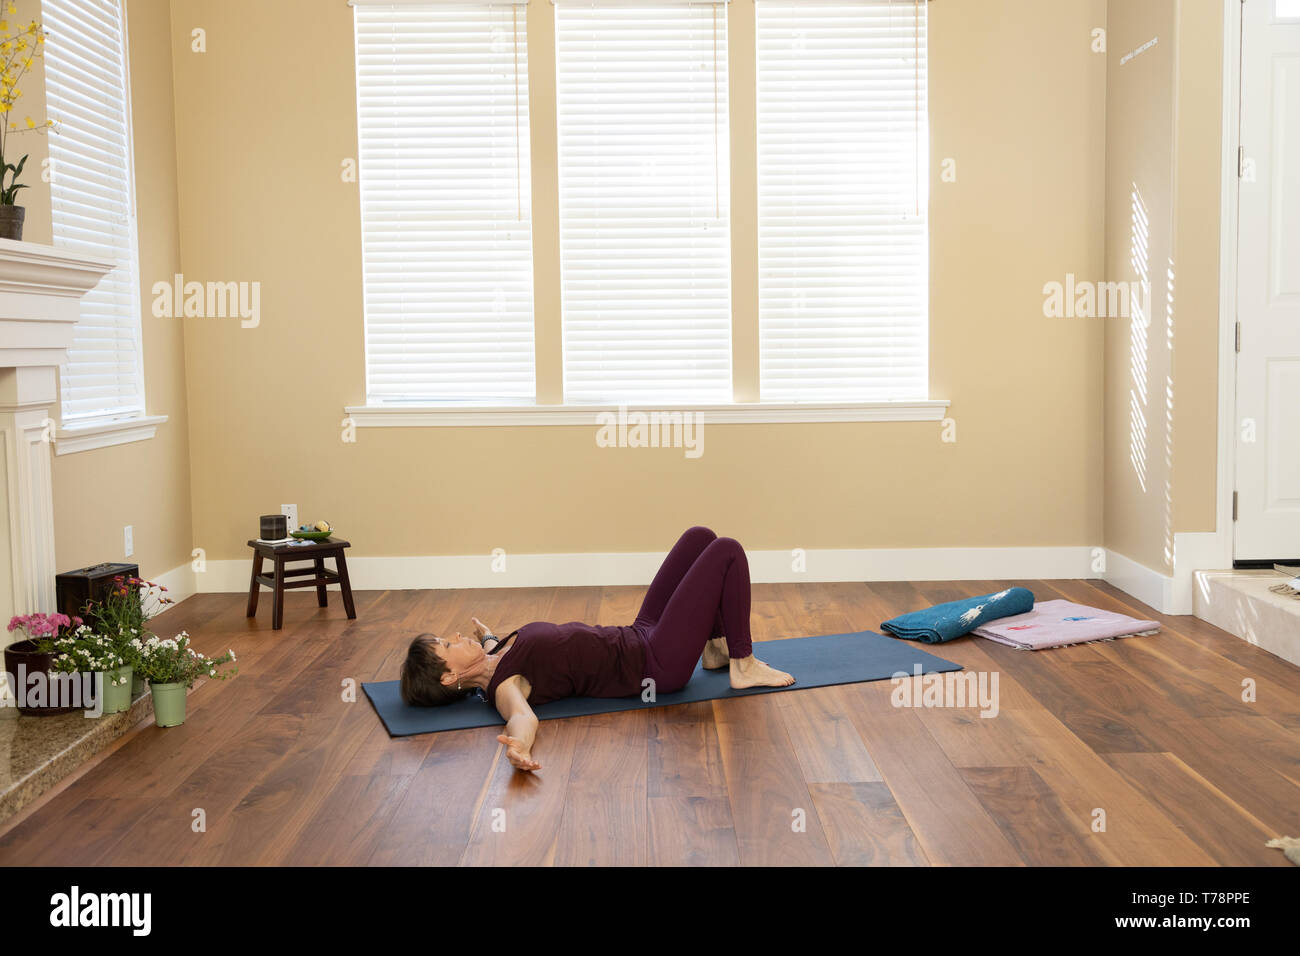 Yoga back on floor bent knees Stock Photo